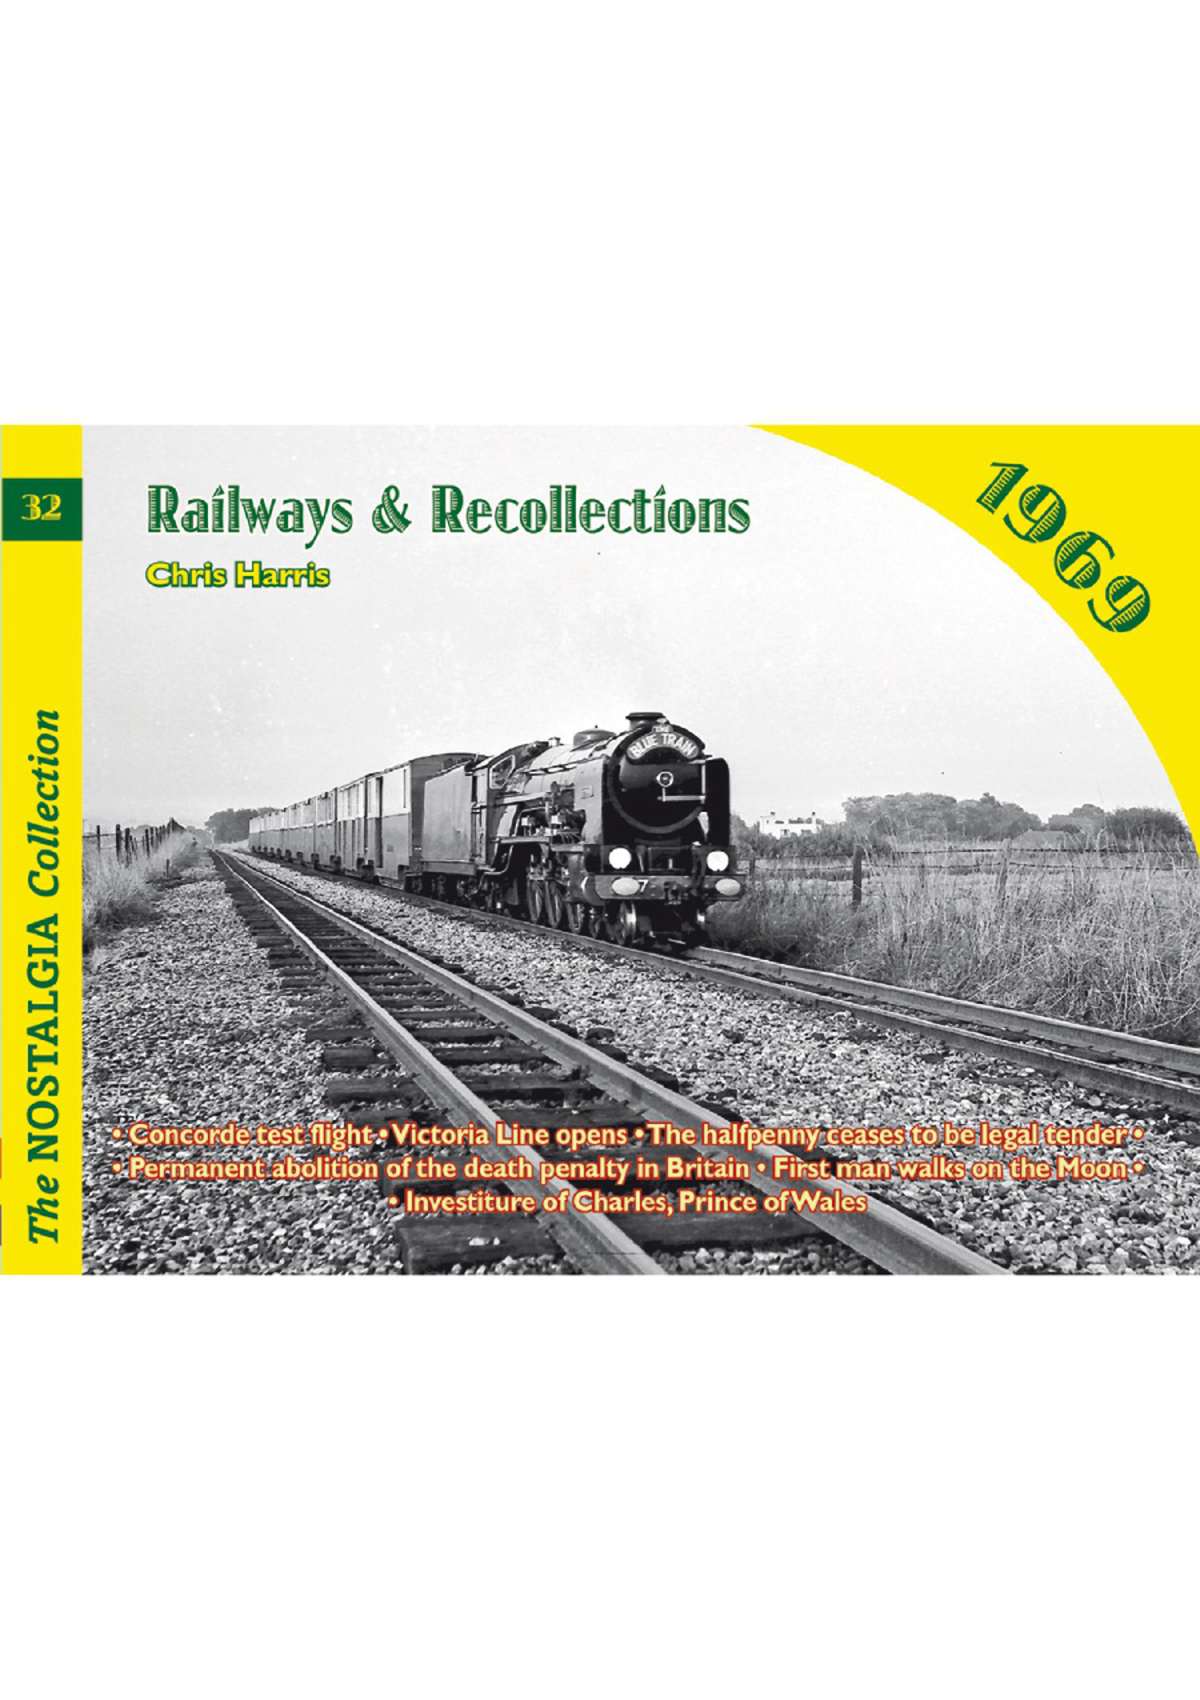 Vol 32: Railways & Recollections 1969